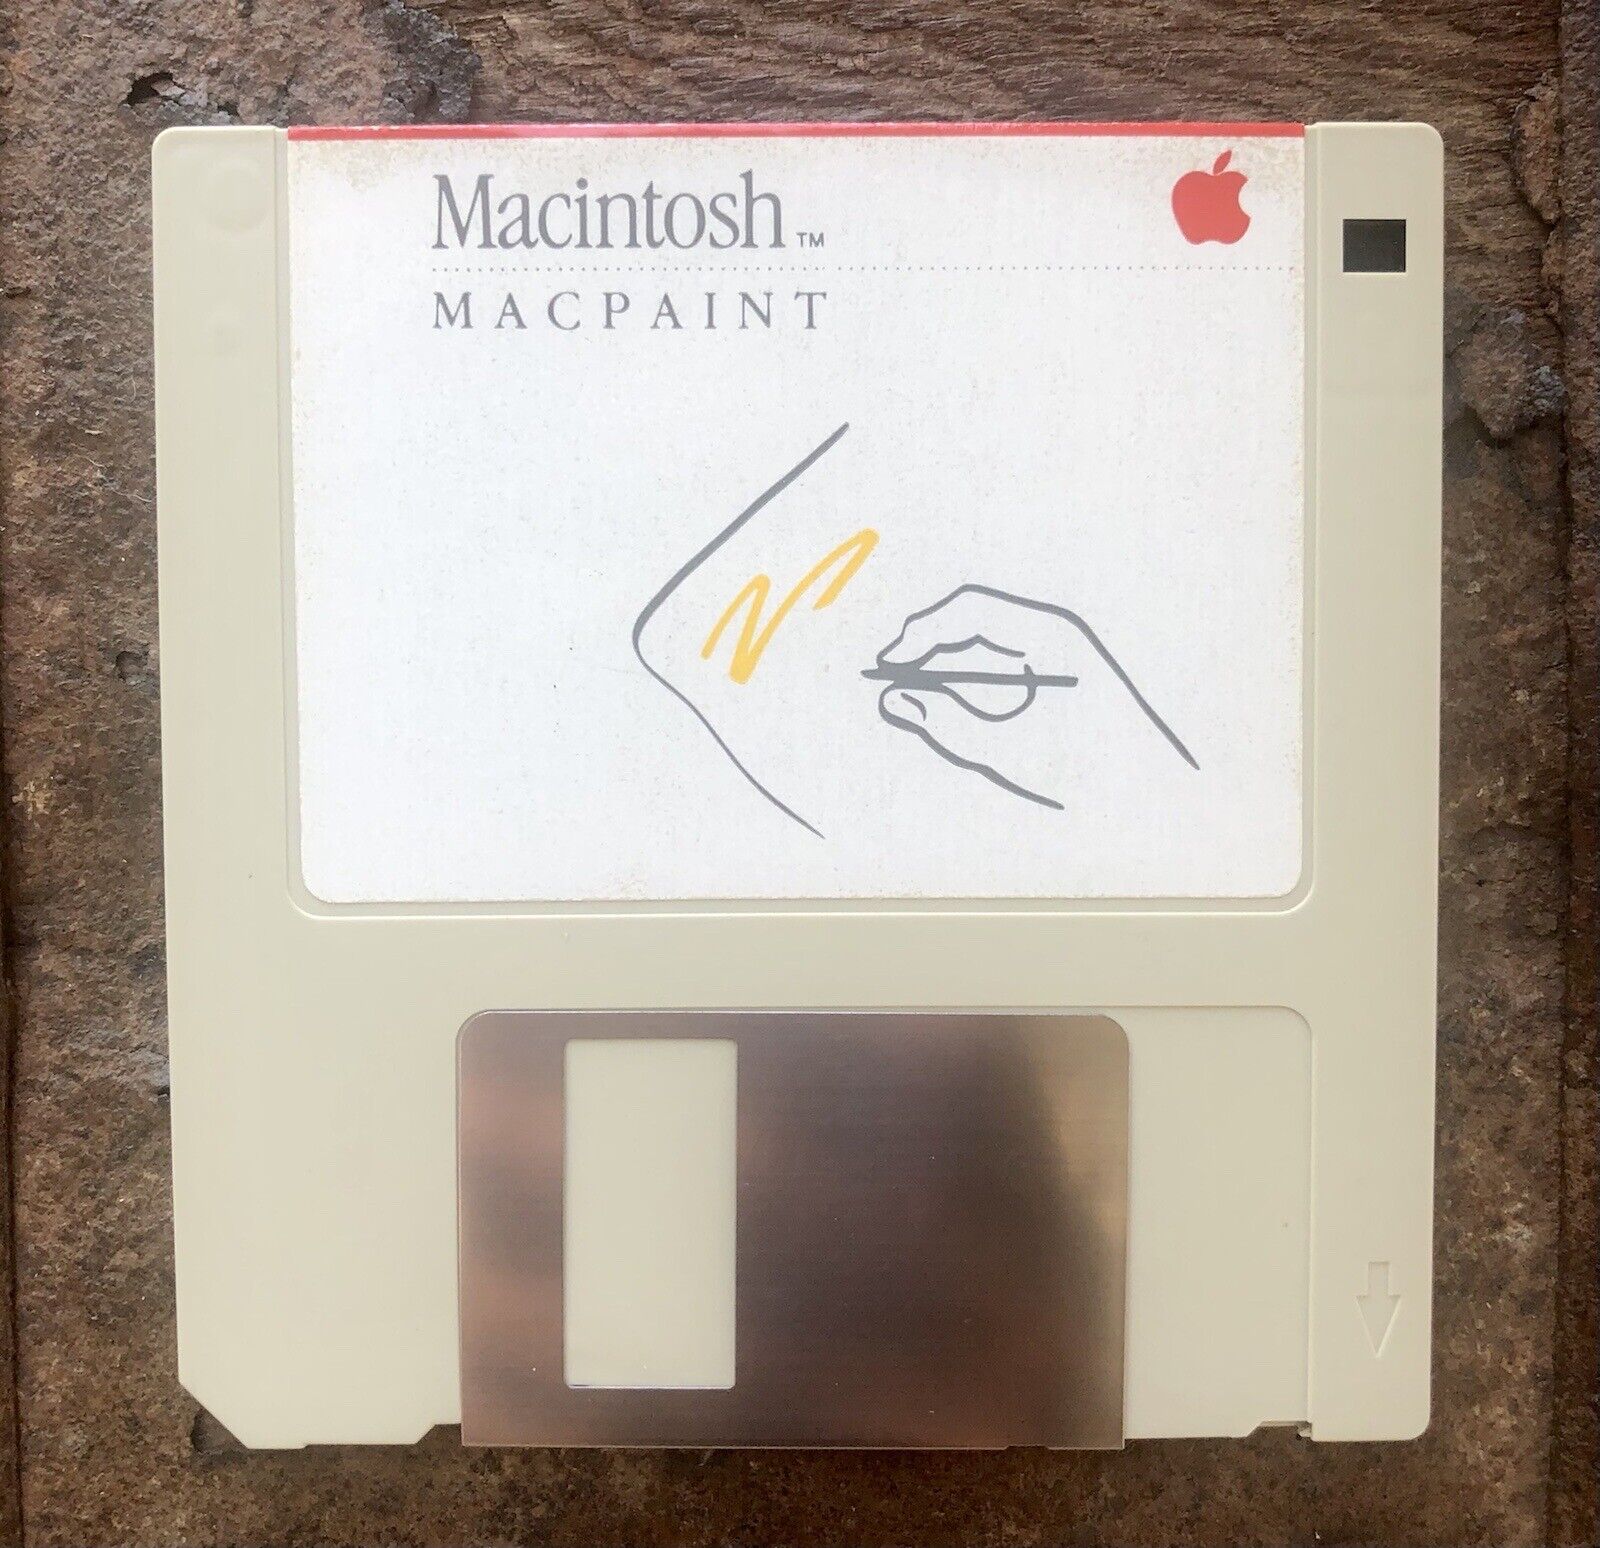 Rare VTG 1984 Apple Macintosh Macpaint 3.5 Floppy Disc EUC 690-5011-D Untested